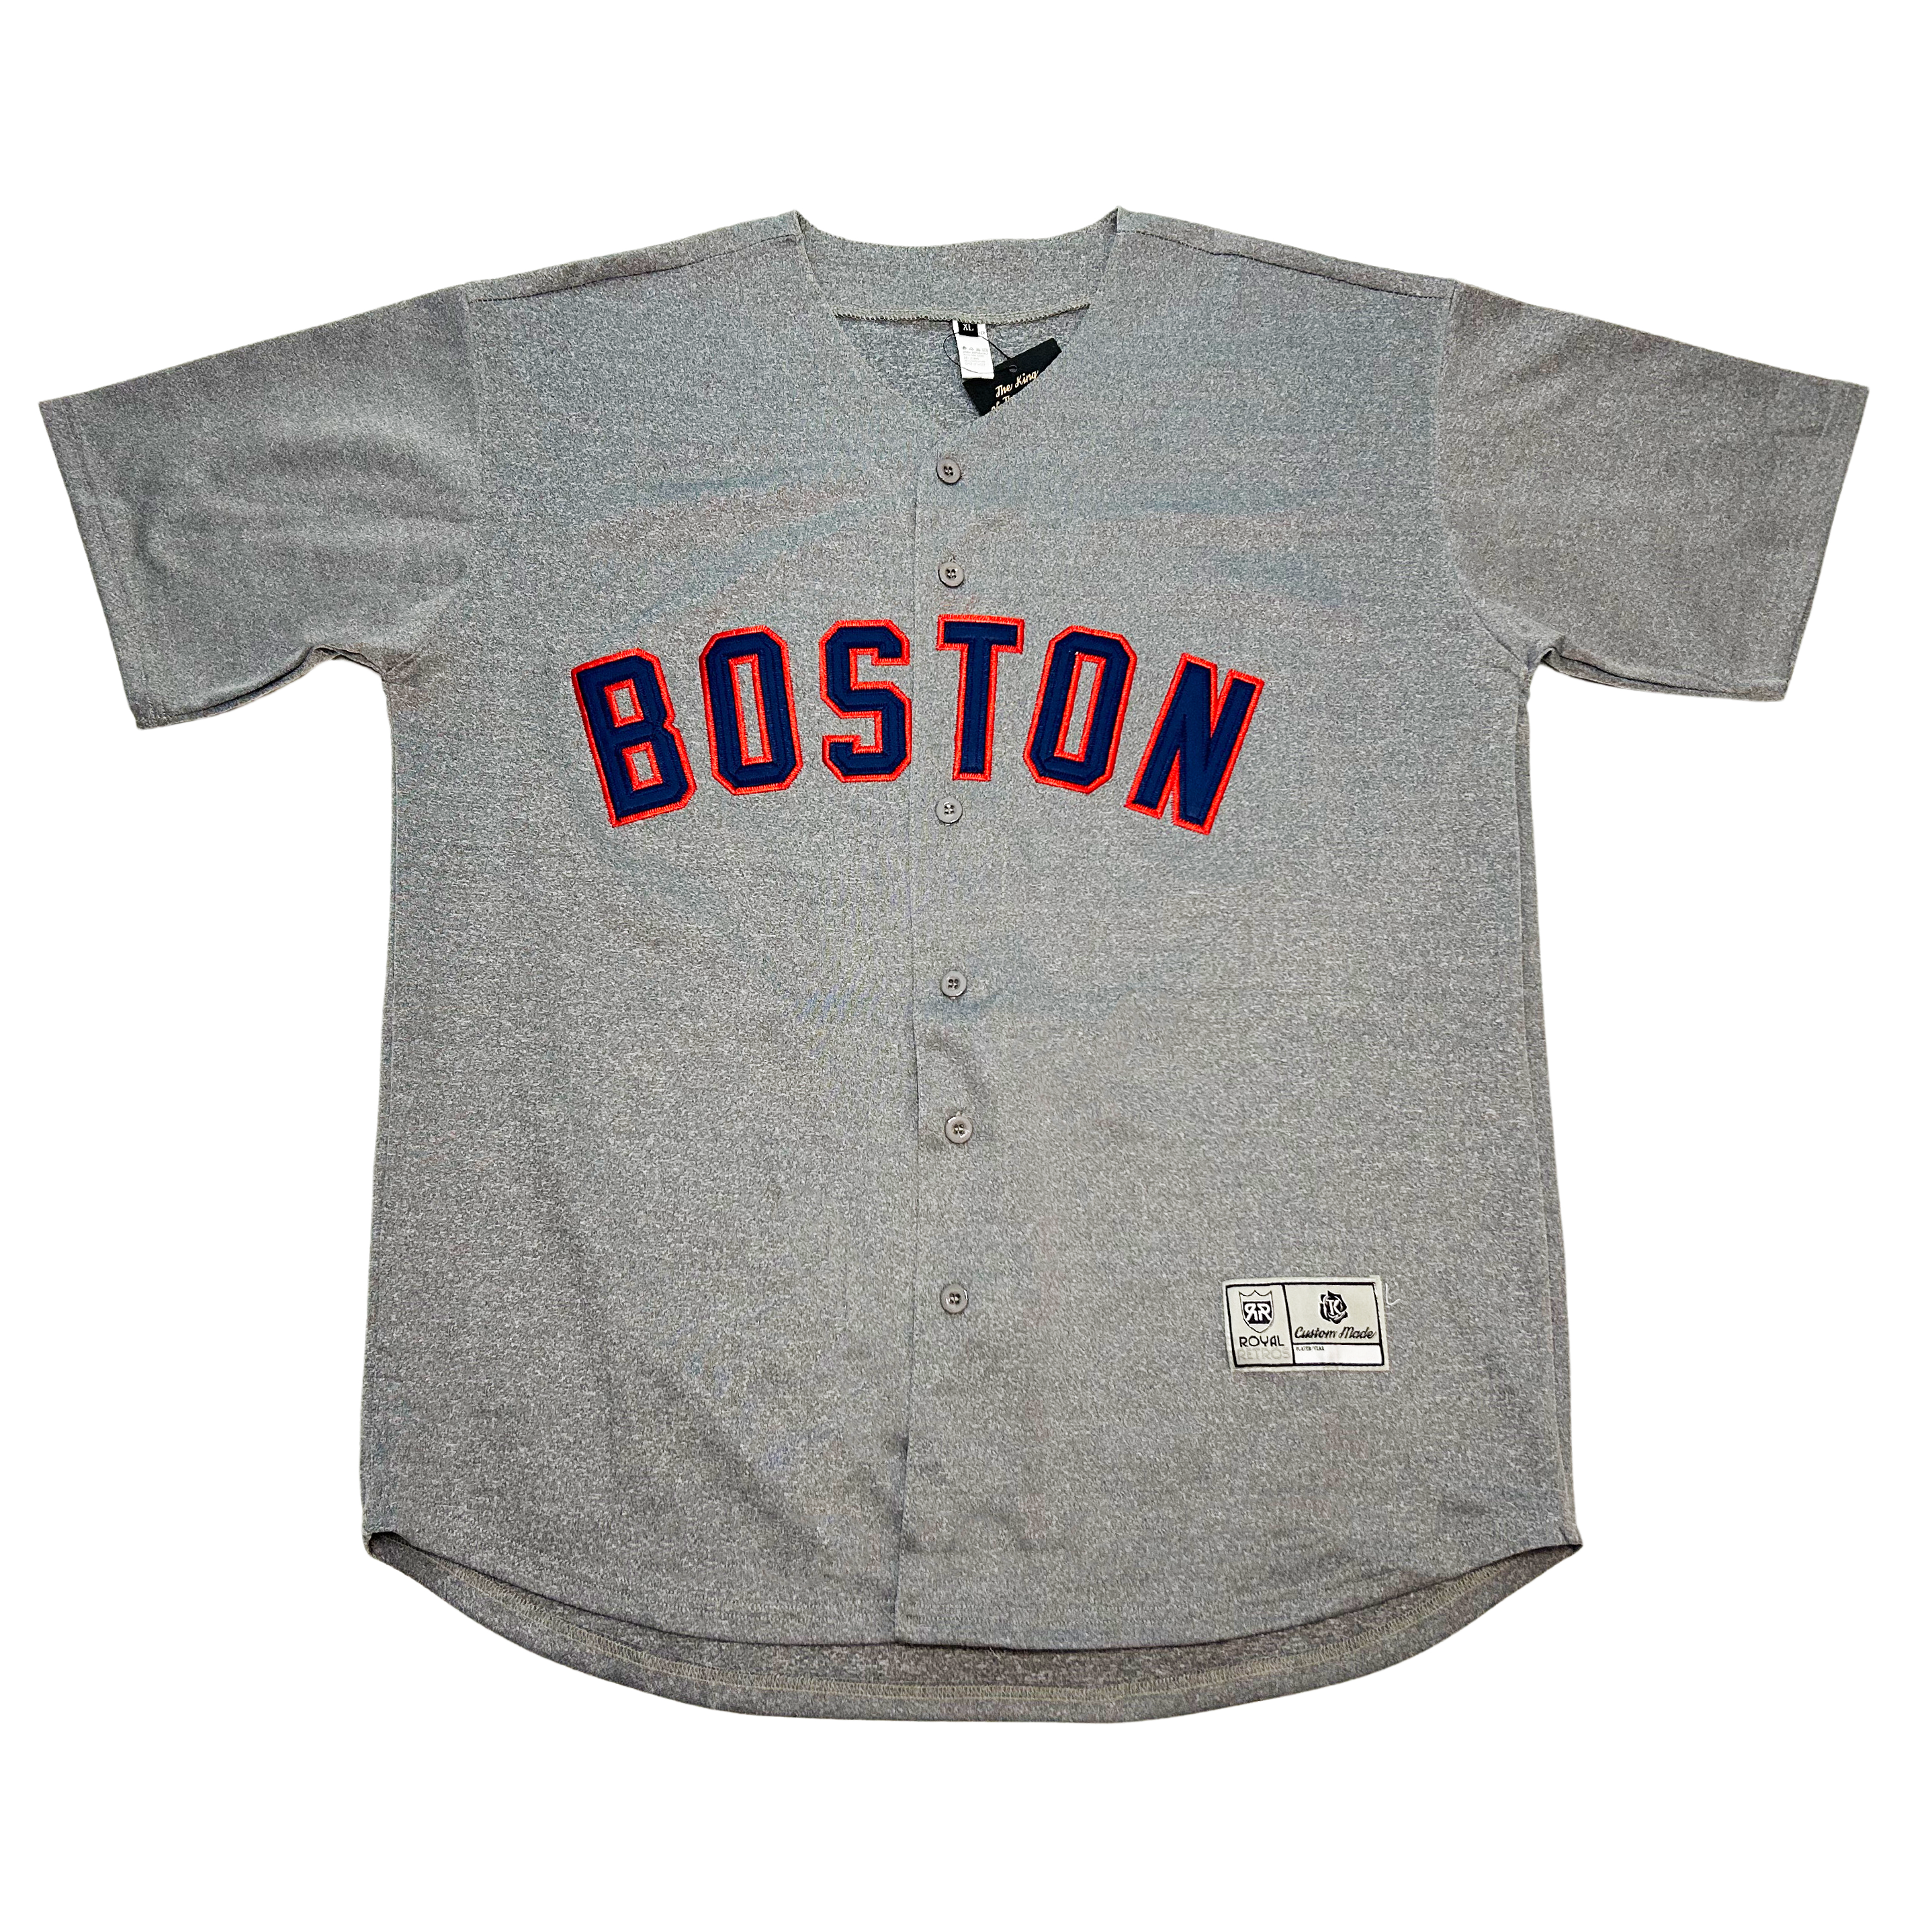 Boston Baseball Jersey - Gray/Navy/Red - 2XL - Royal Retros